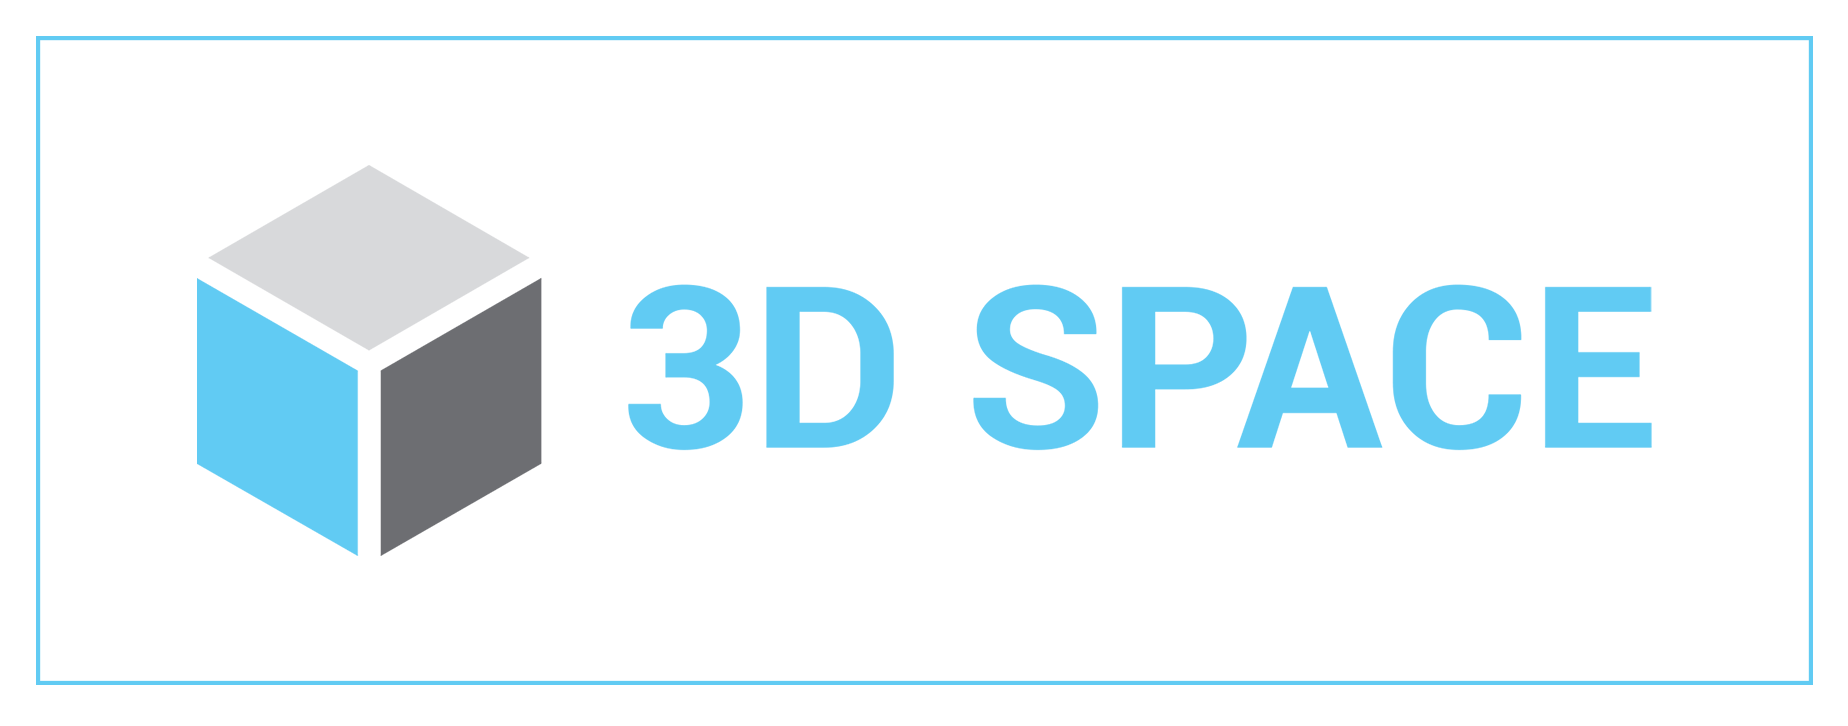 3D Space 